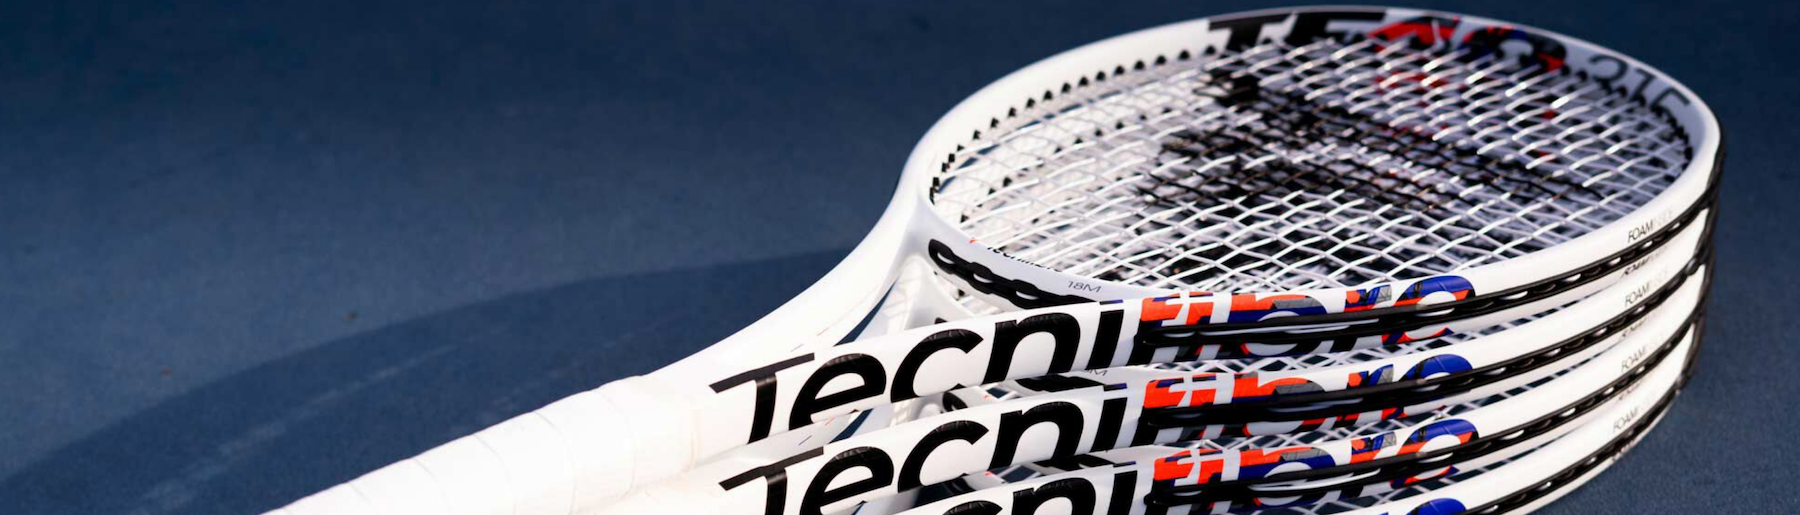 Tecnifibre TF-40 Rackets on a Tennis court